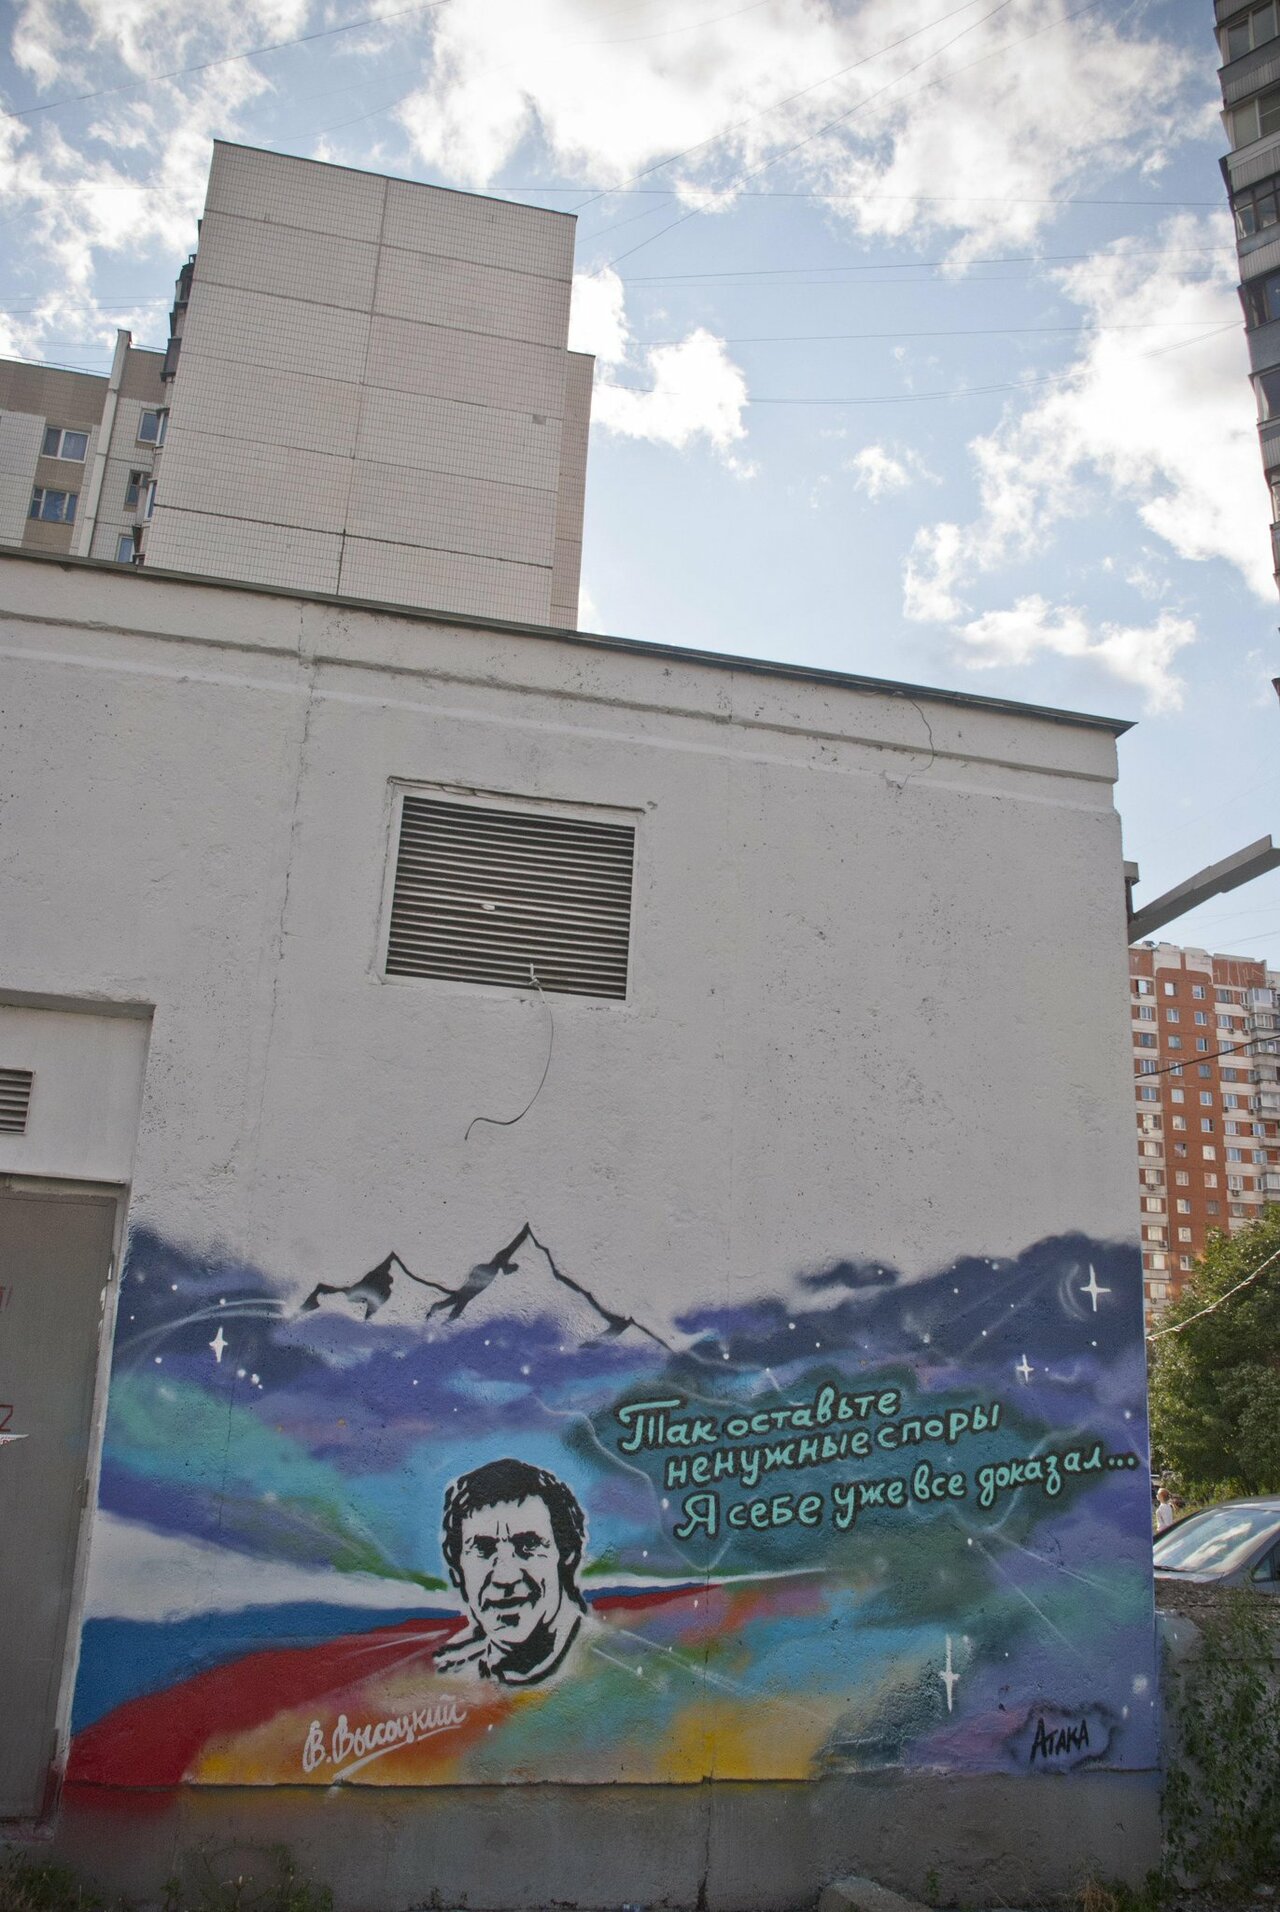 RT @rkras888: Всех с открытием улицы Высоцкого!!! #мояМосква #МояУлица #Высоцкий #graffiti #art #streetart #Москва #граффити http://t.co/wopcPzrQGK